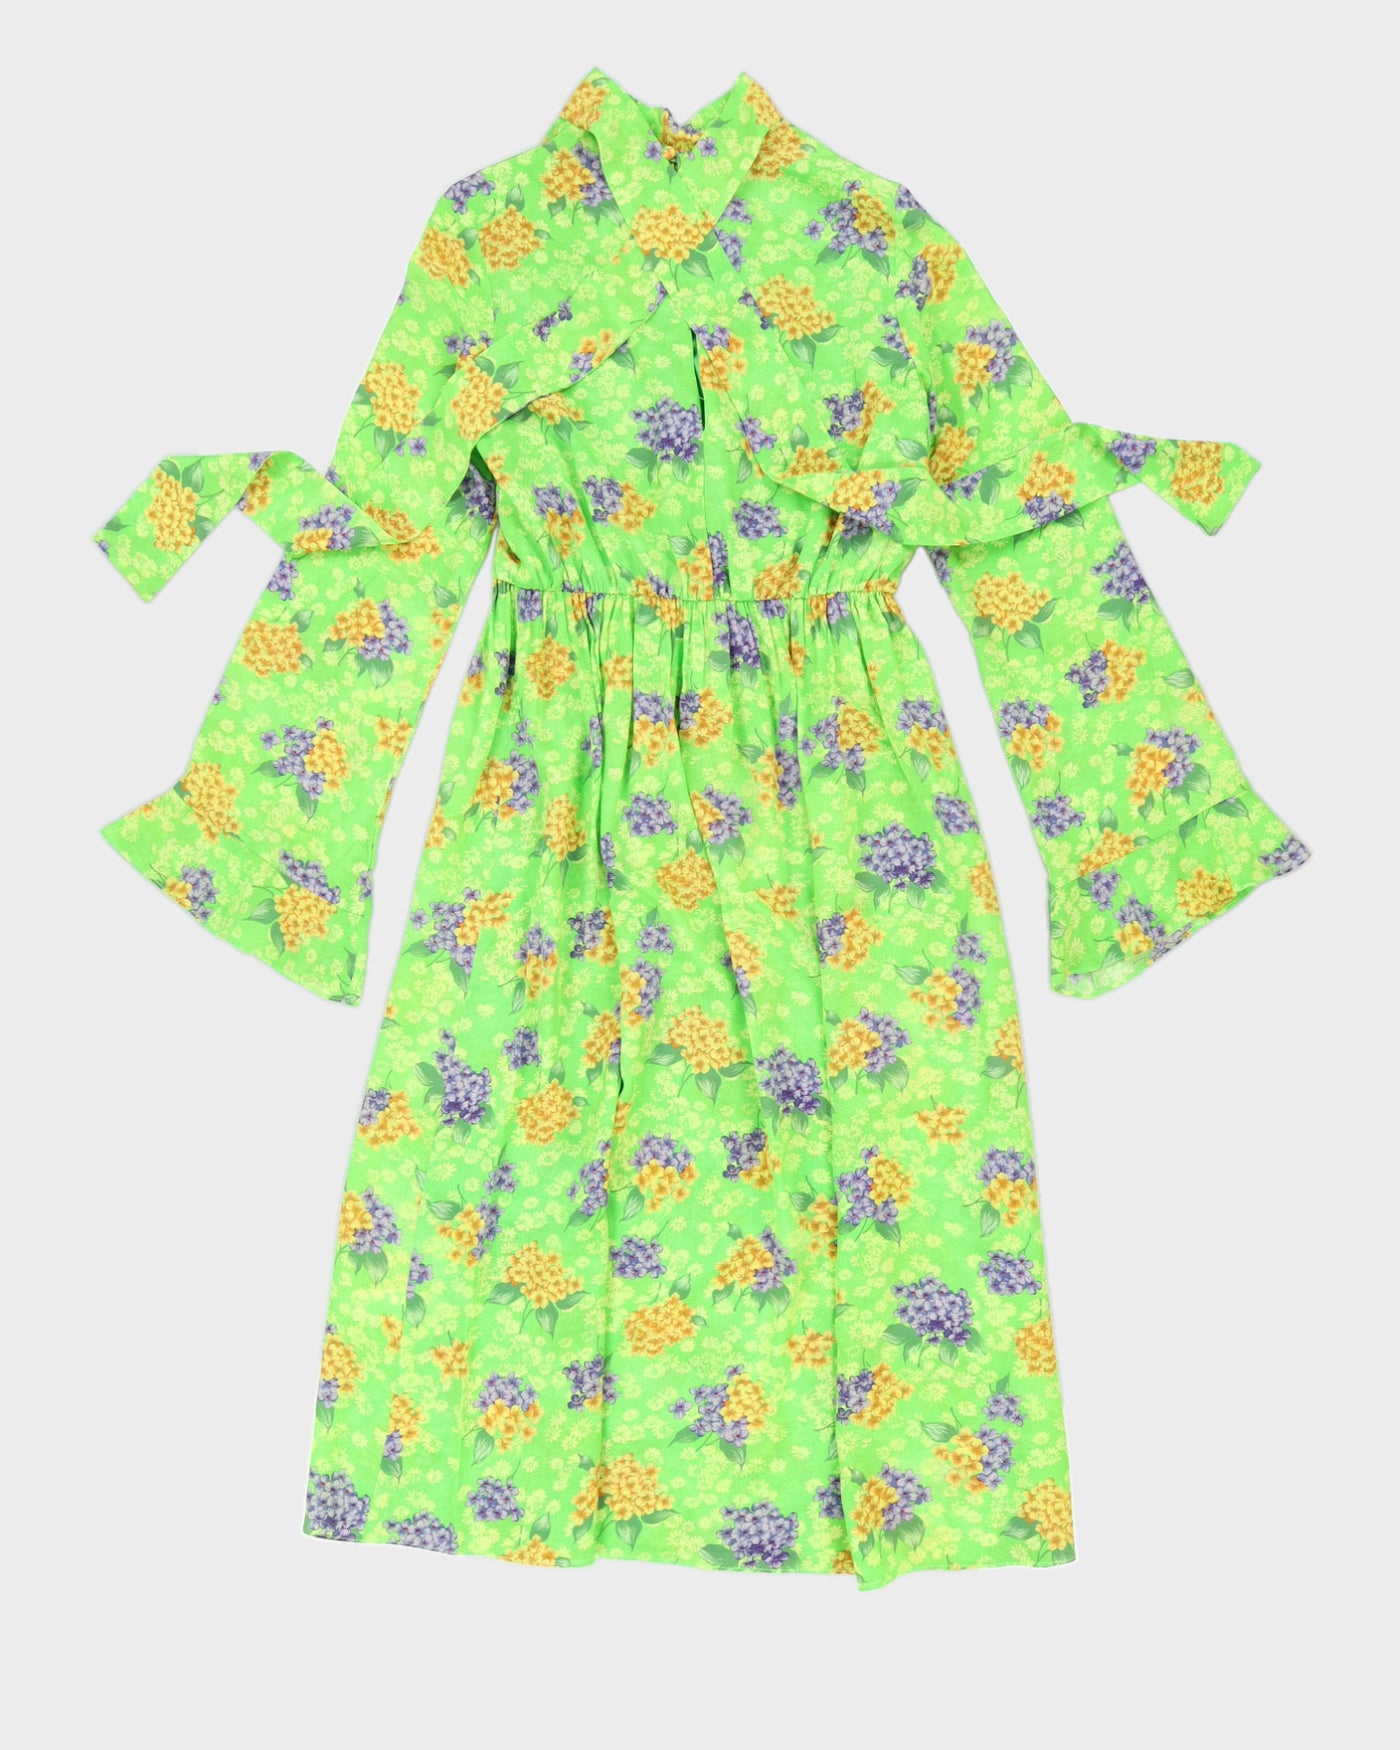 Les Reveries Green Floral Silk Dress - M